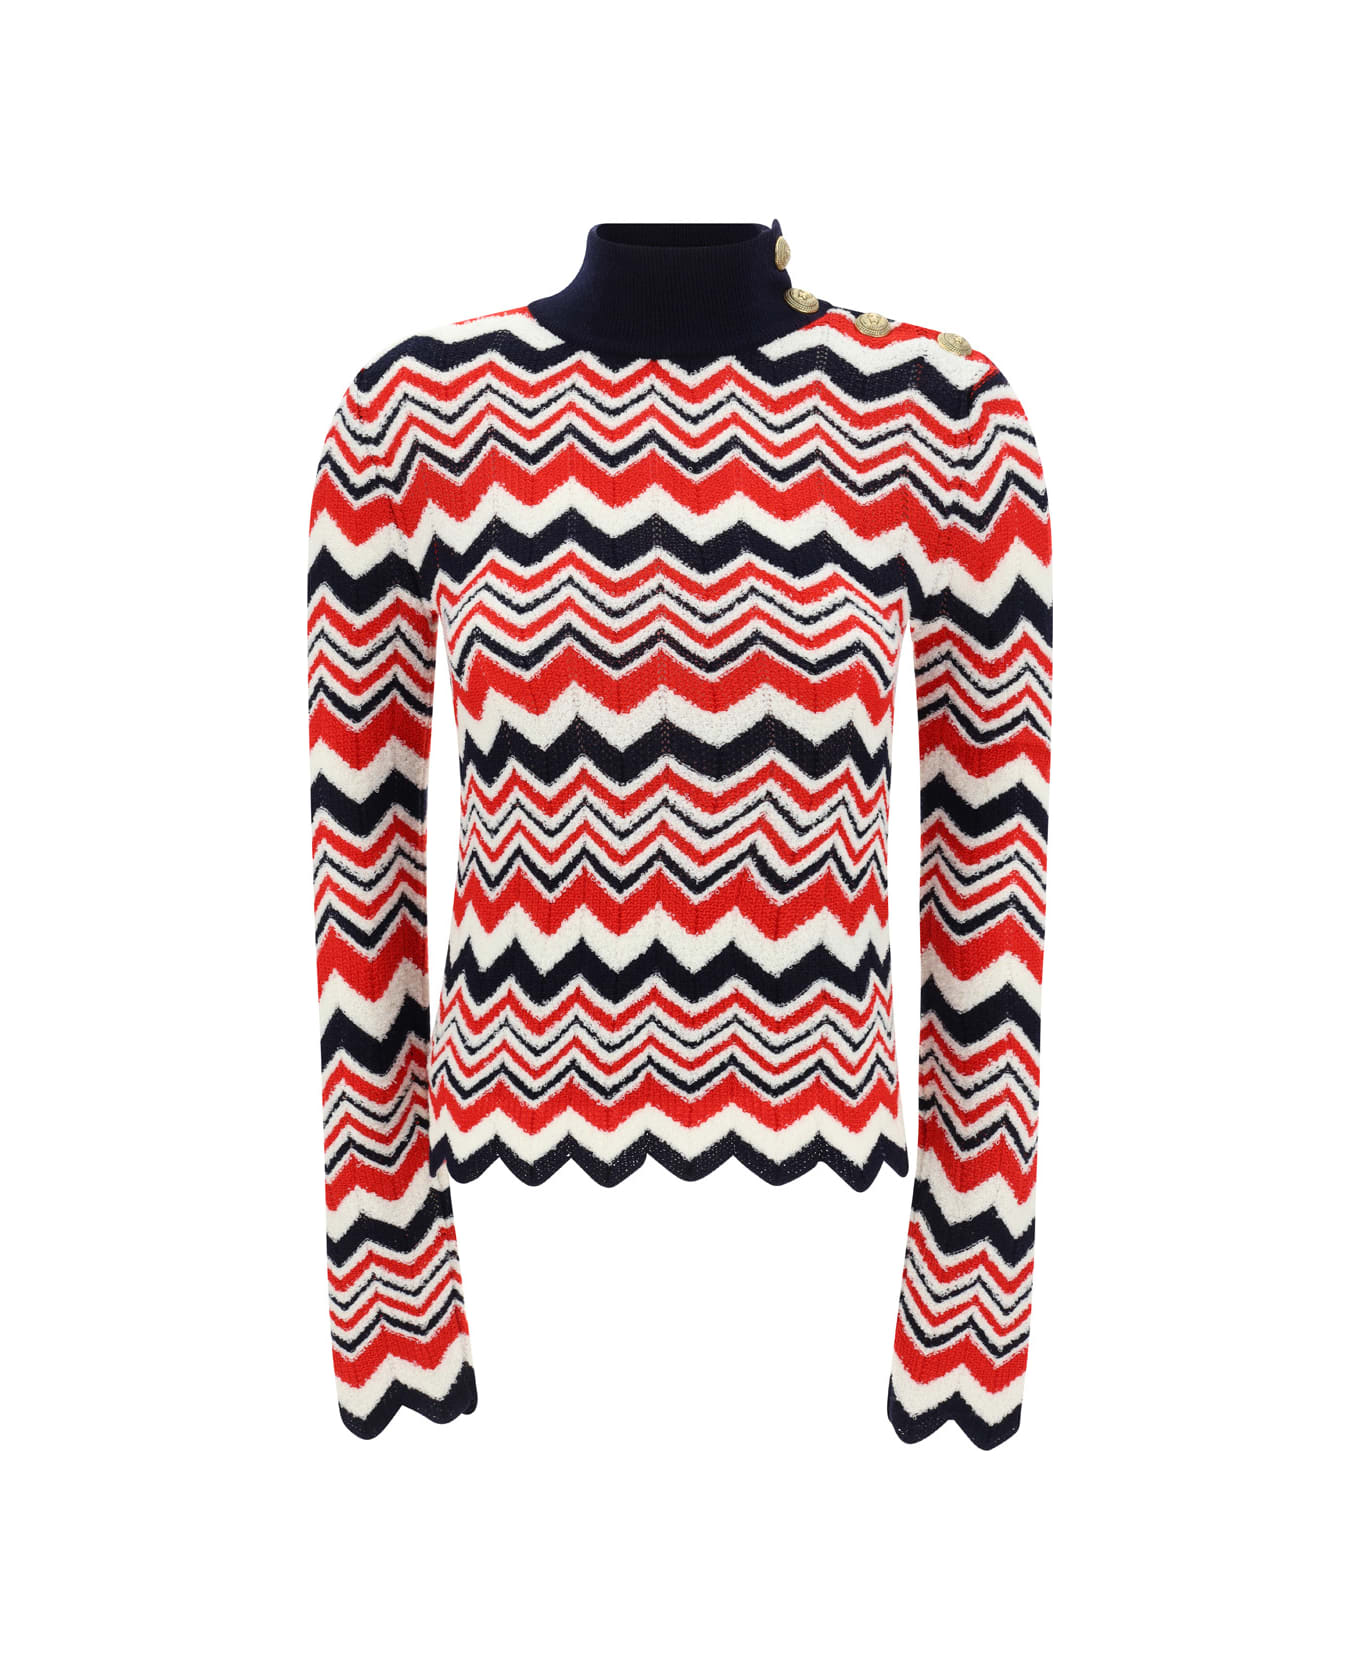 Balmain Turtleneck Sweater - Bleu Marine Fonce/blanc/rouge ニットウェア